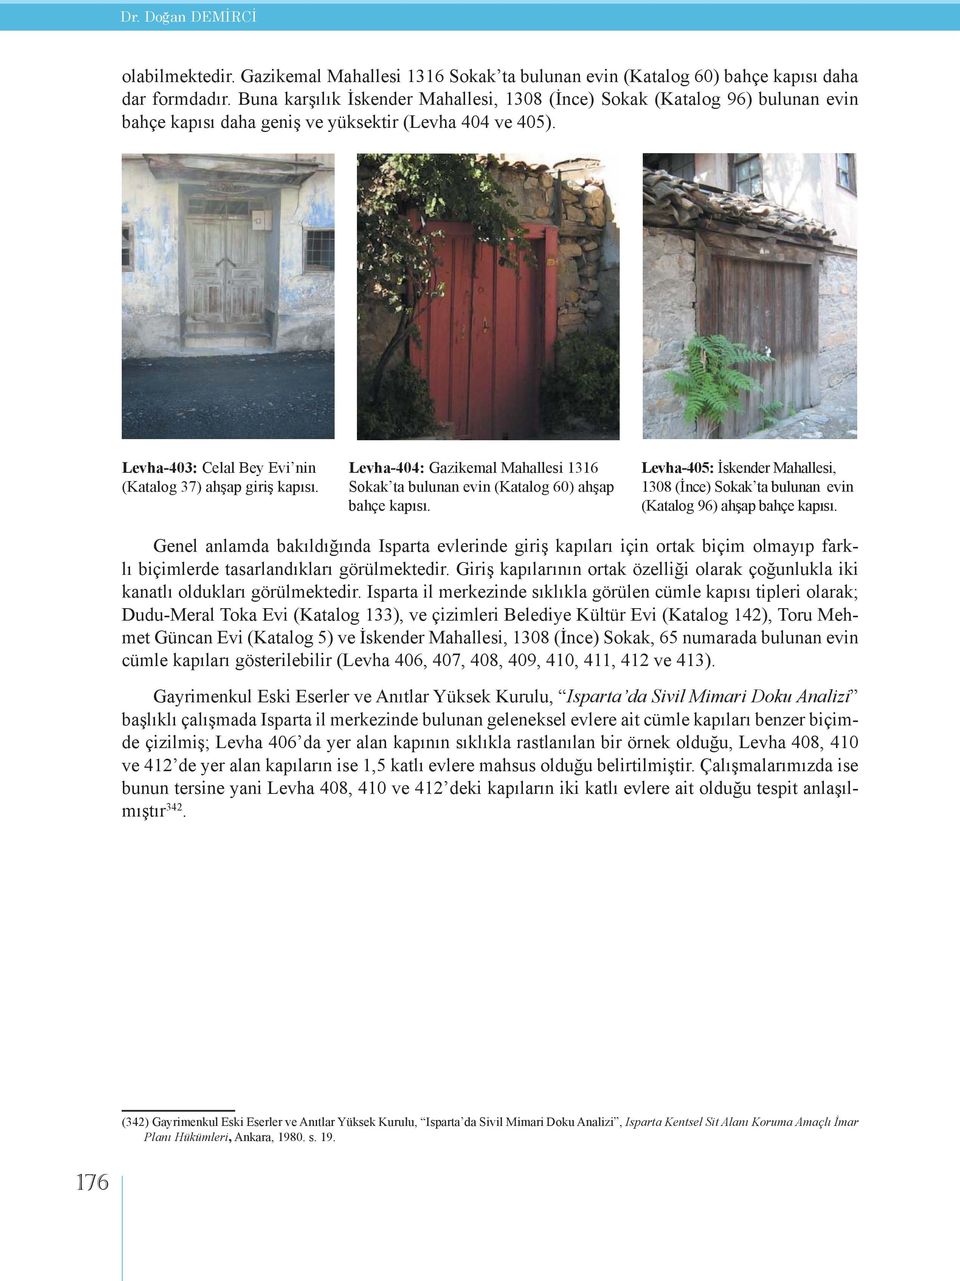 Levha-404: Gazikemal Mahallesi 1316 Sokak ta bulunan evin (Katalog 60) ahşap bahçe kapısı. Levha-405: İskender Mahallesi, 1308 (İnce) Sokak ta bulunan evin (Katalog 96) ahşap bahçe kapısı.